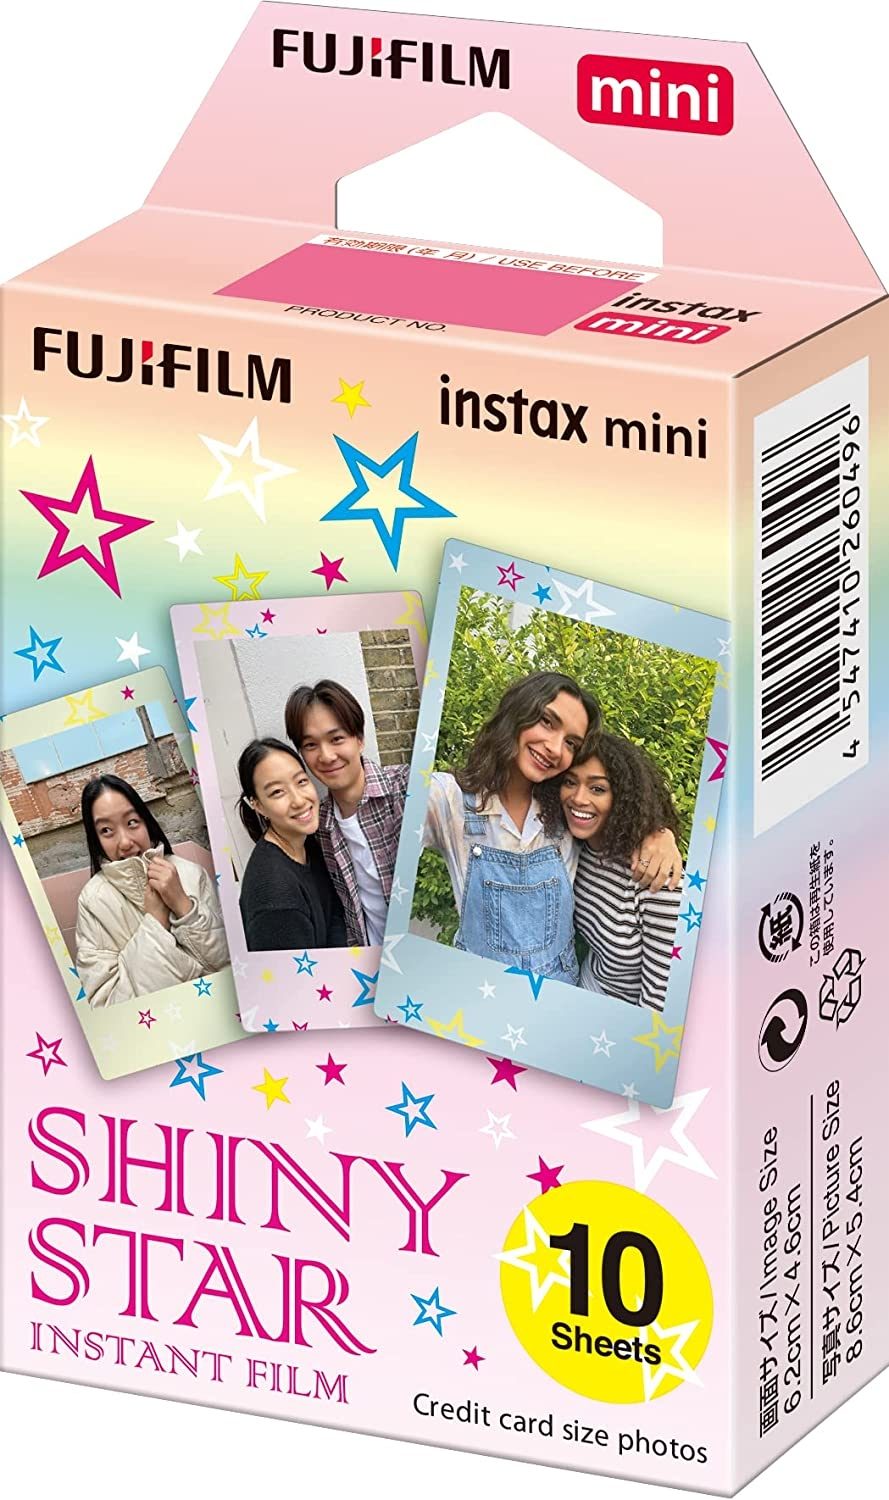 INSTAX MINI SHINY STAR FILM PK OF 10EXP